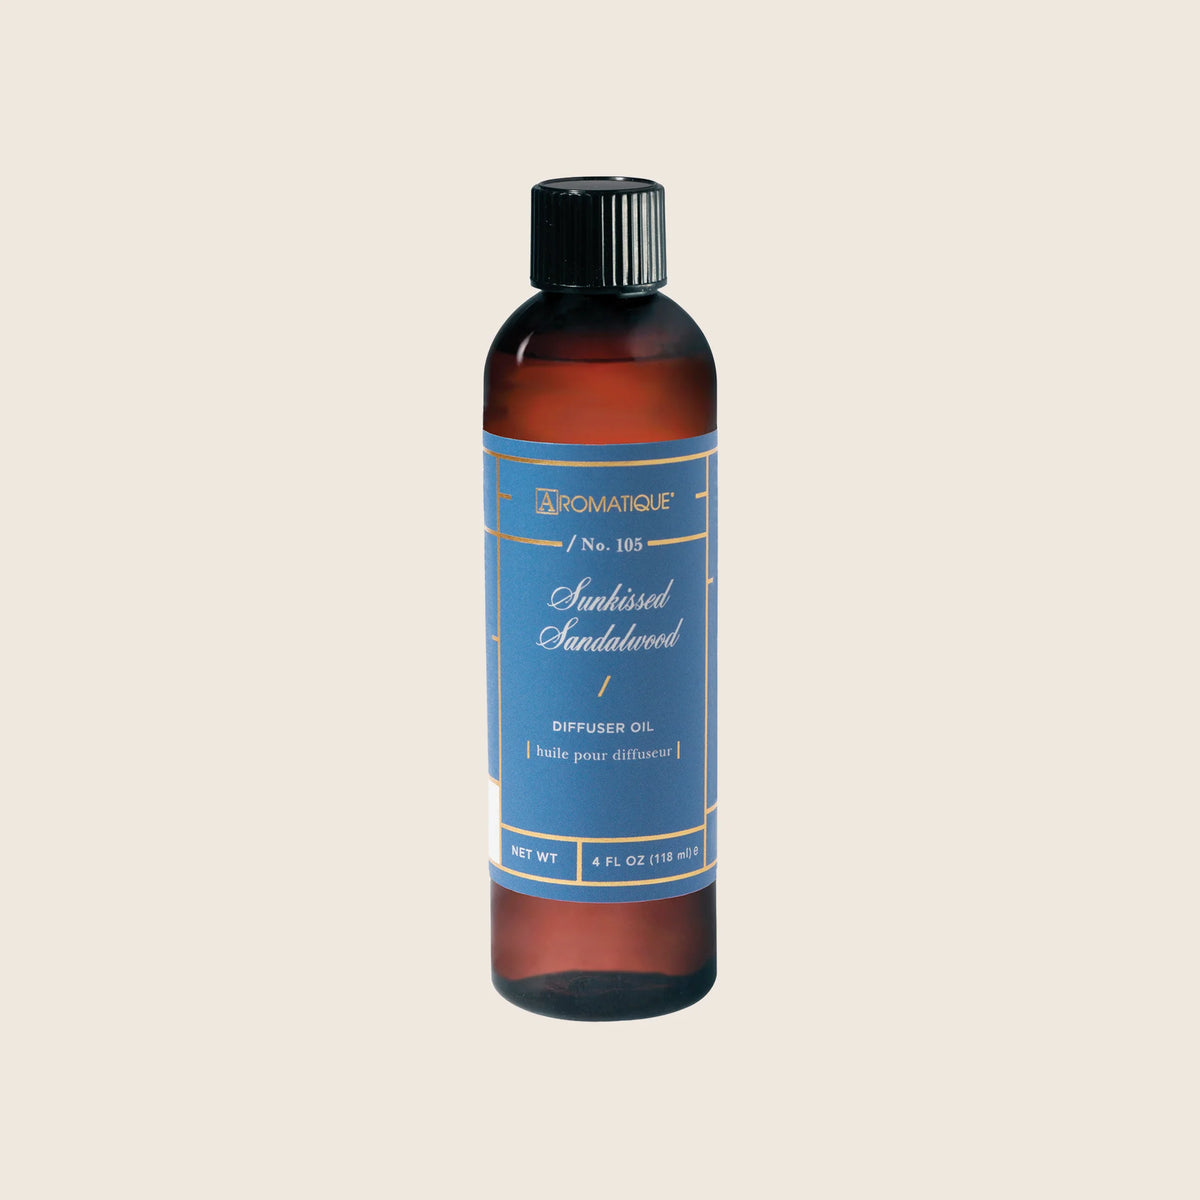 Aromatique - Diffuser Oil Refill Sunkissed Sandalwood